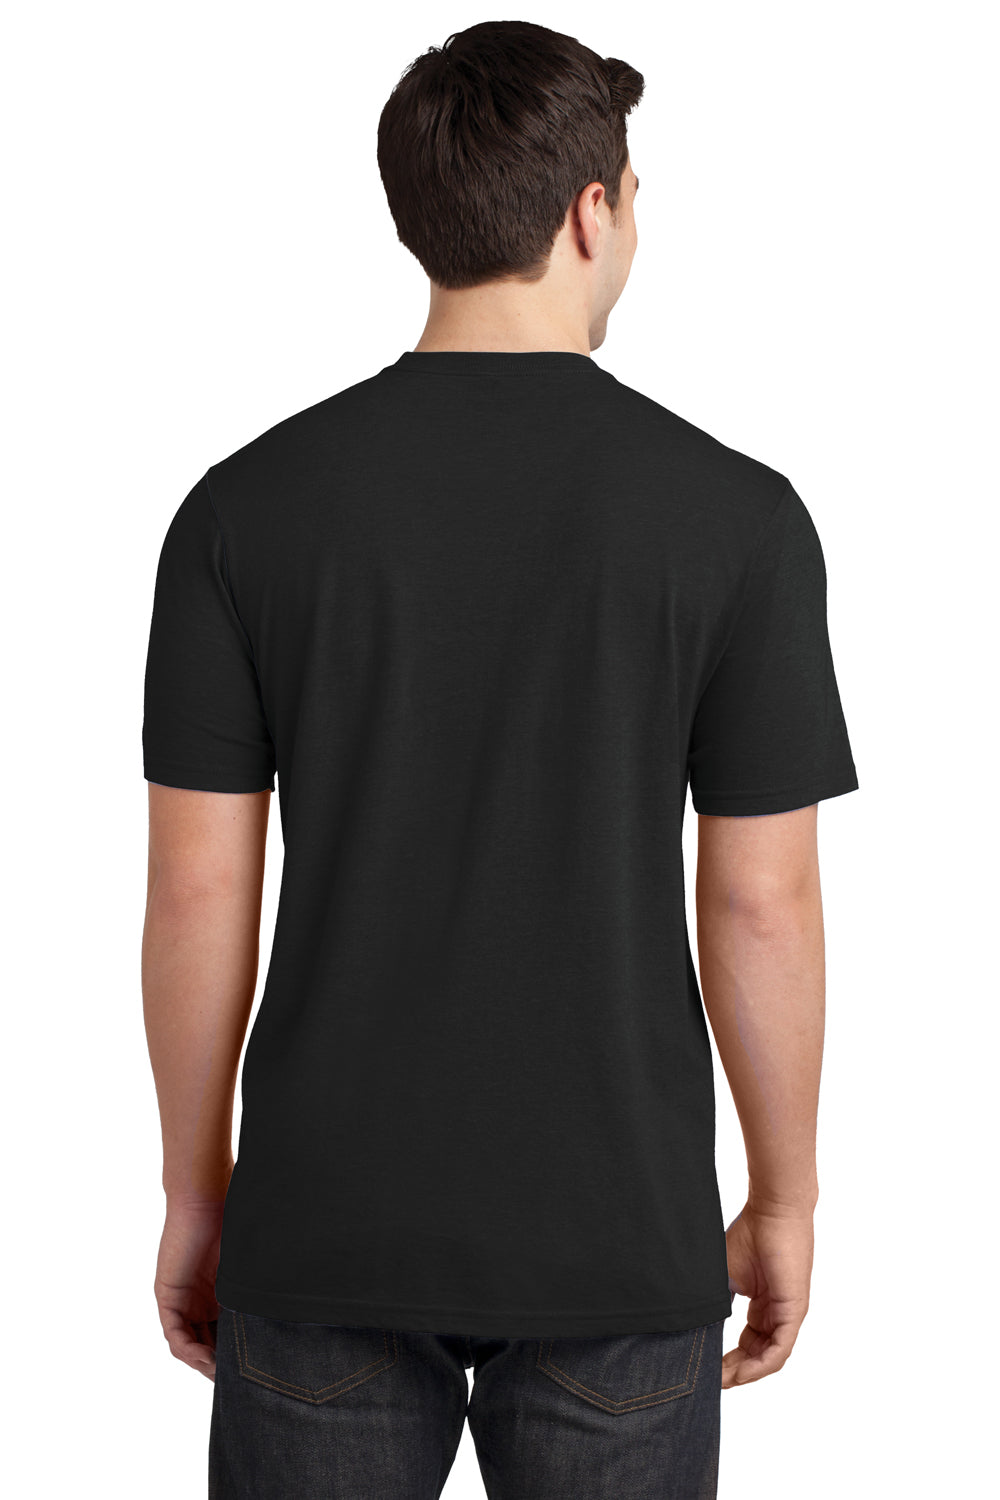 District DT6000P Mens Very Important Short Sleeve Crewneck T-Shirt w/ Pocket Black Back